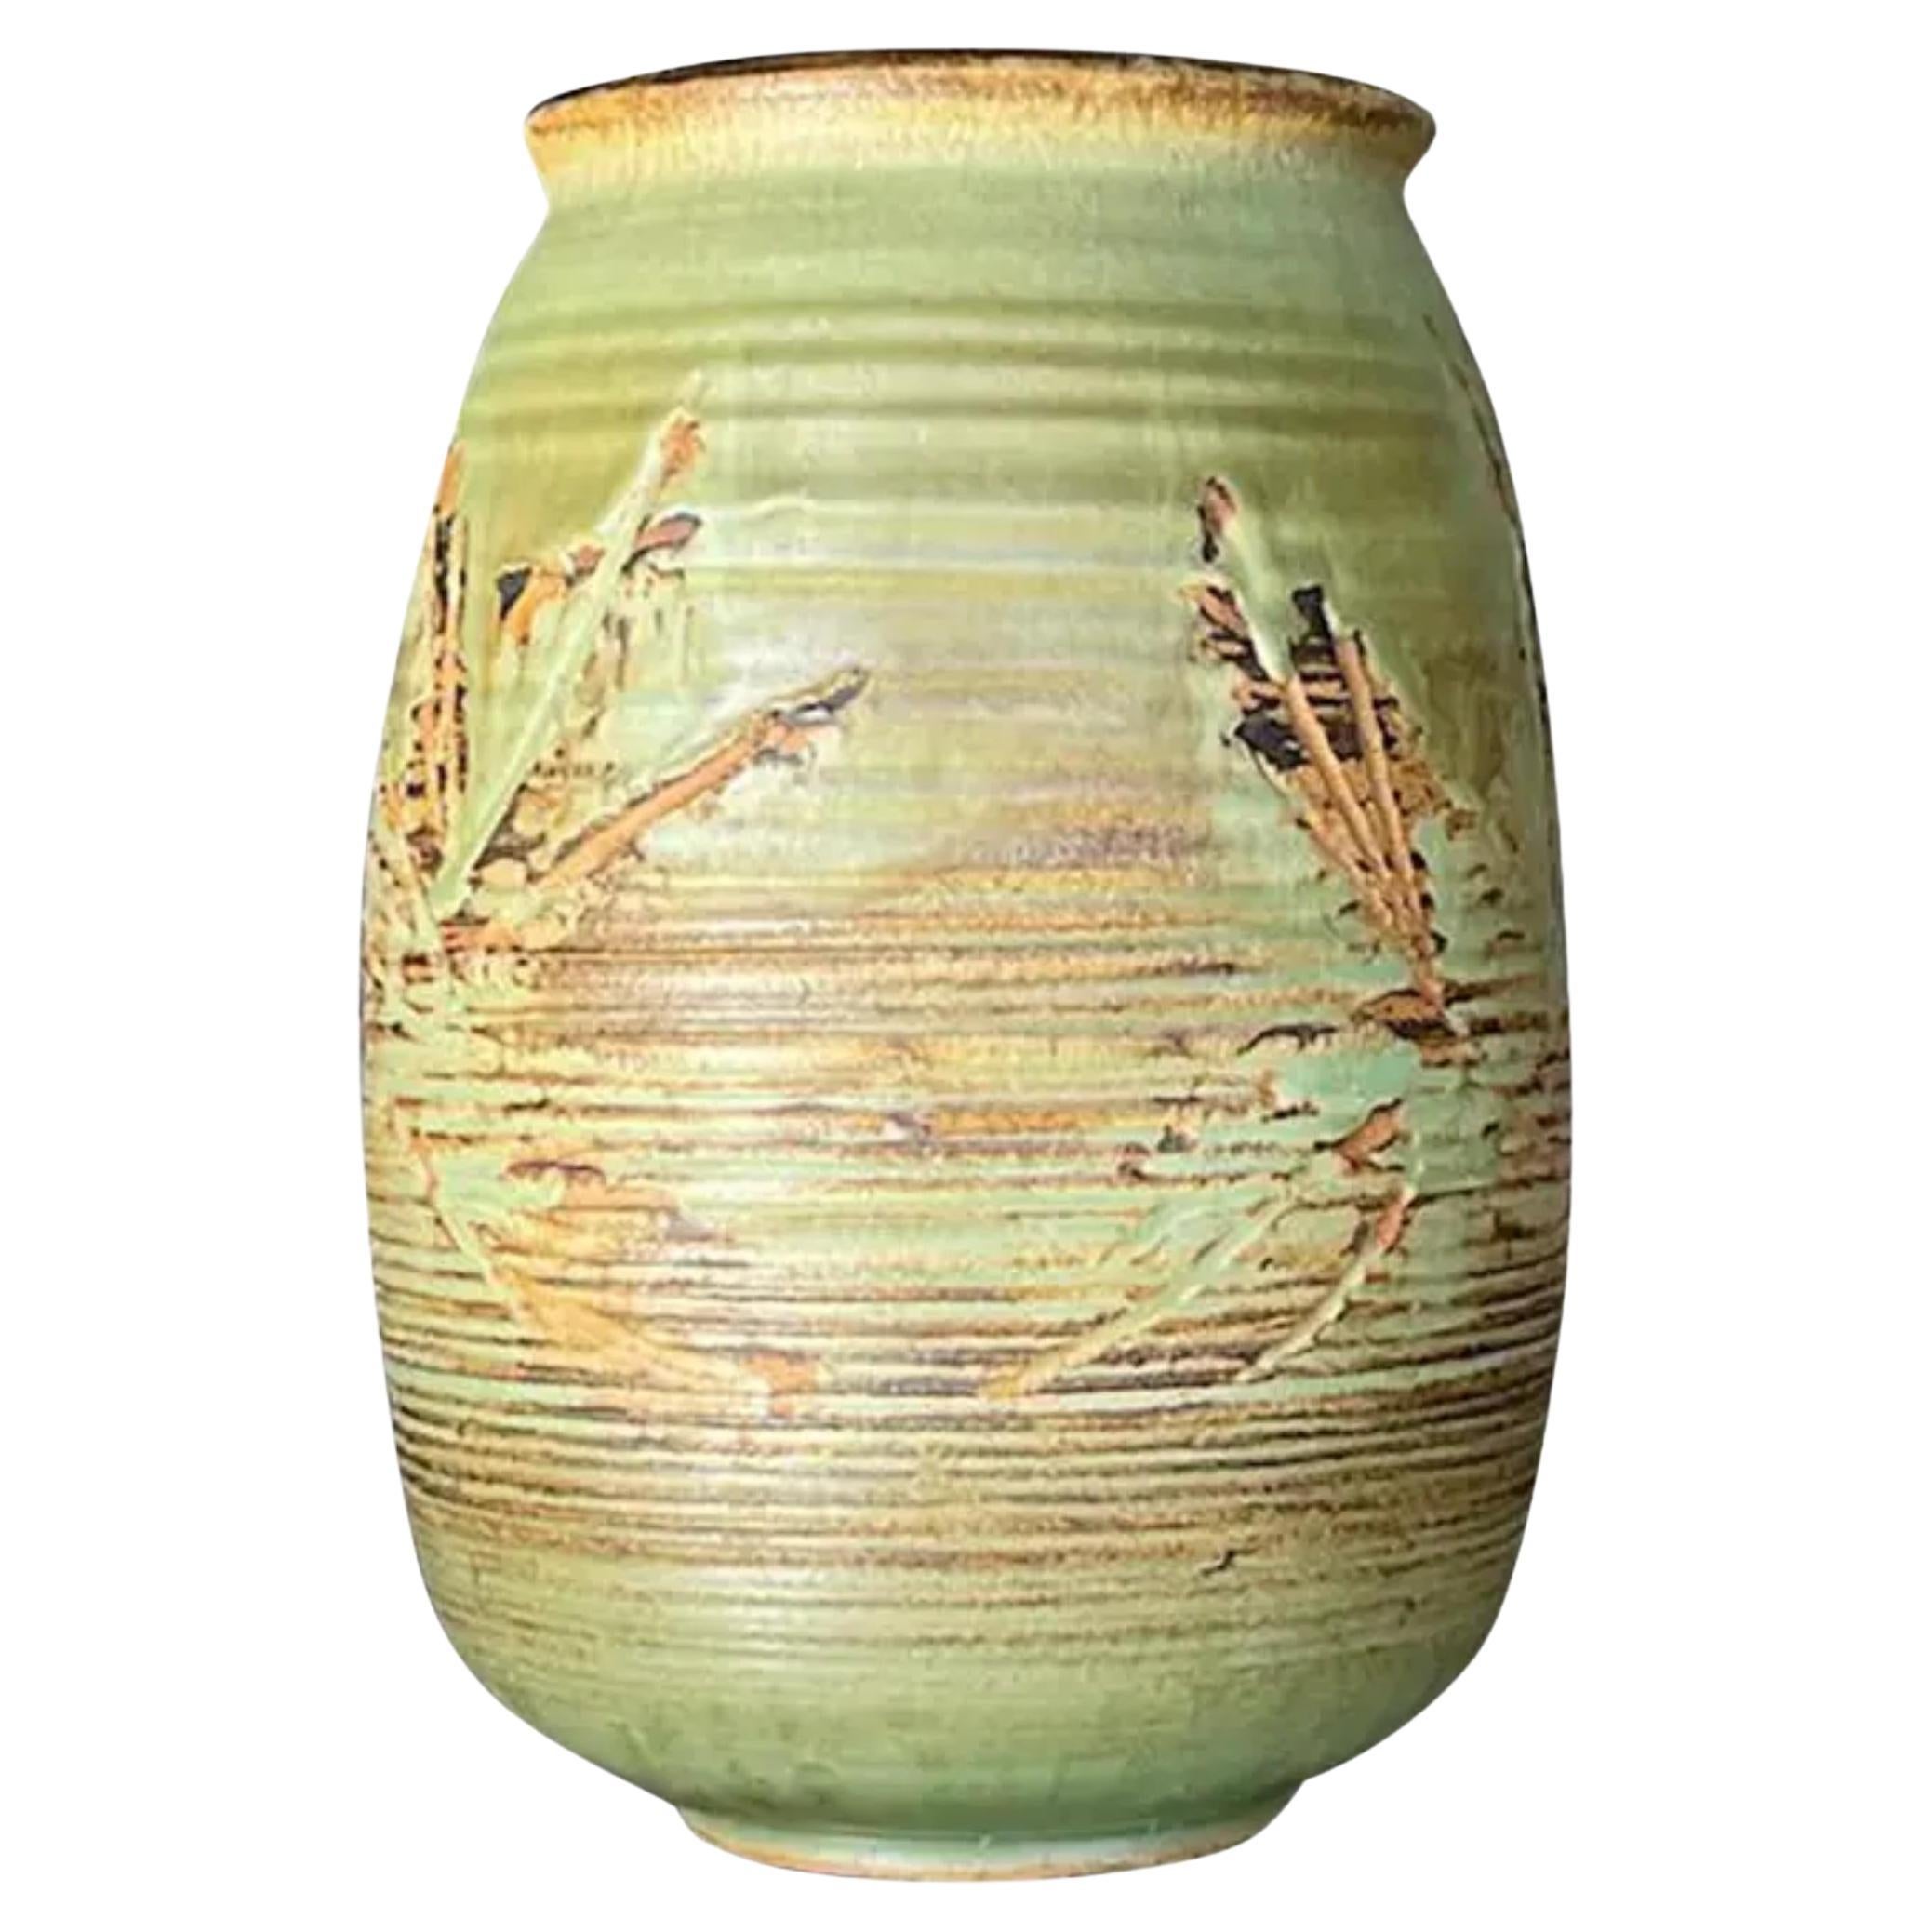 Vase vintage de Studio Pottery signé Boho